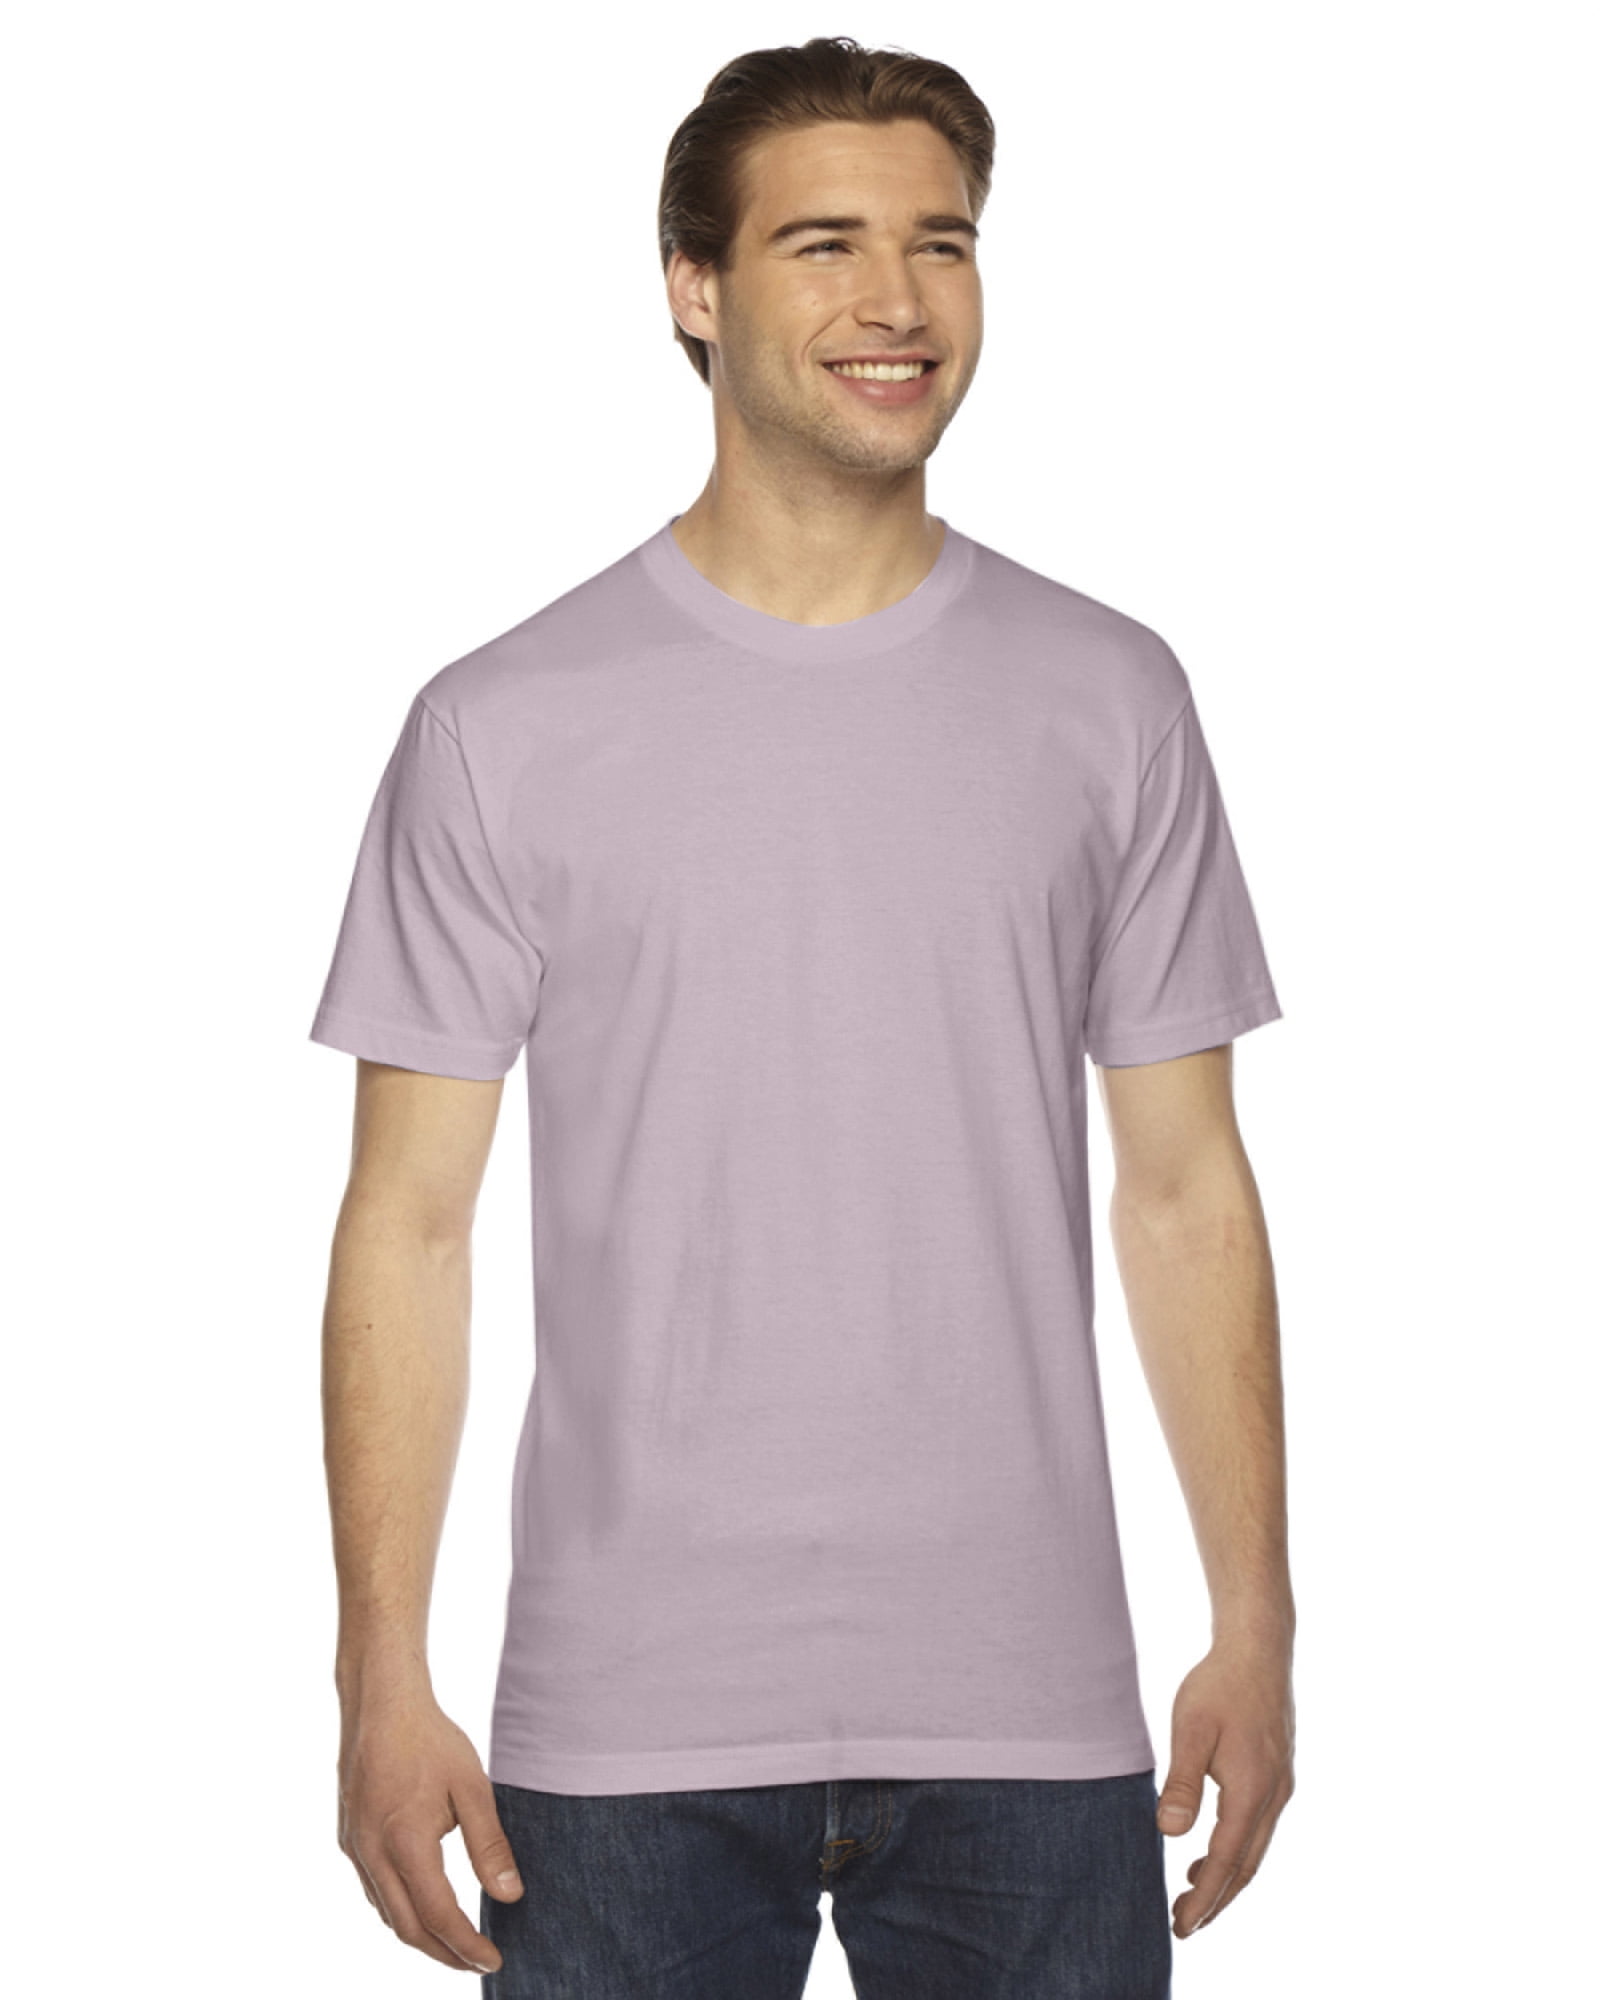 American Apparel Unisex Fine Jersey Short-Sleeve T-Shirt Aqua M 